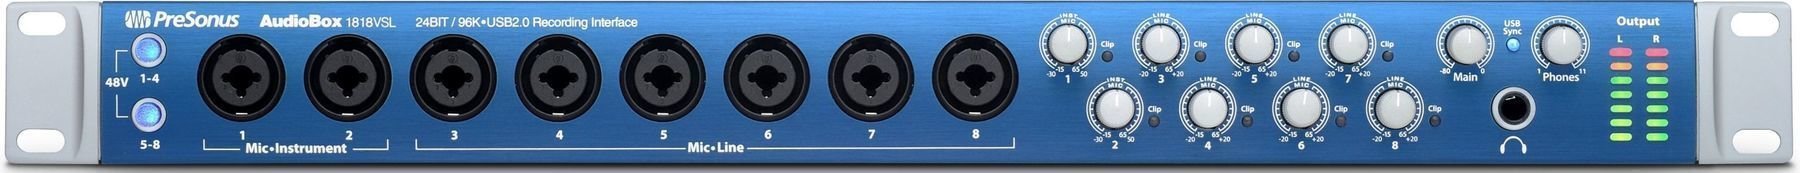 USB audio převodník - zvuková karta Presonus AudioBox 1818 VSL